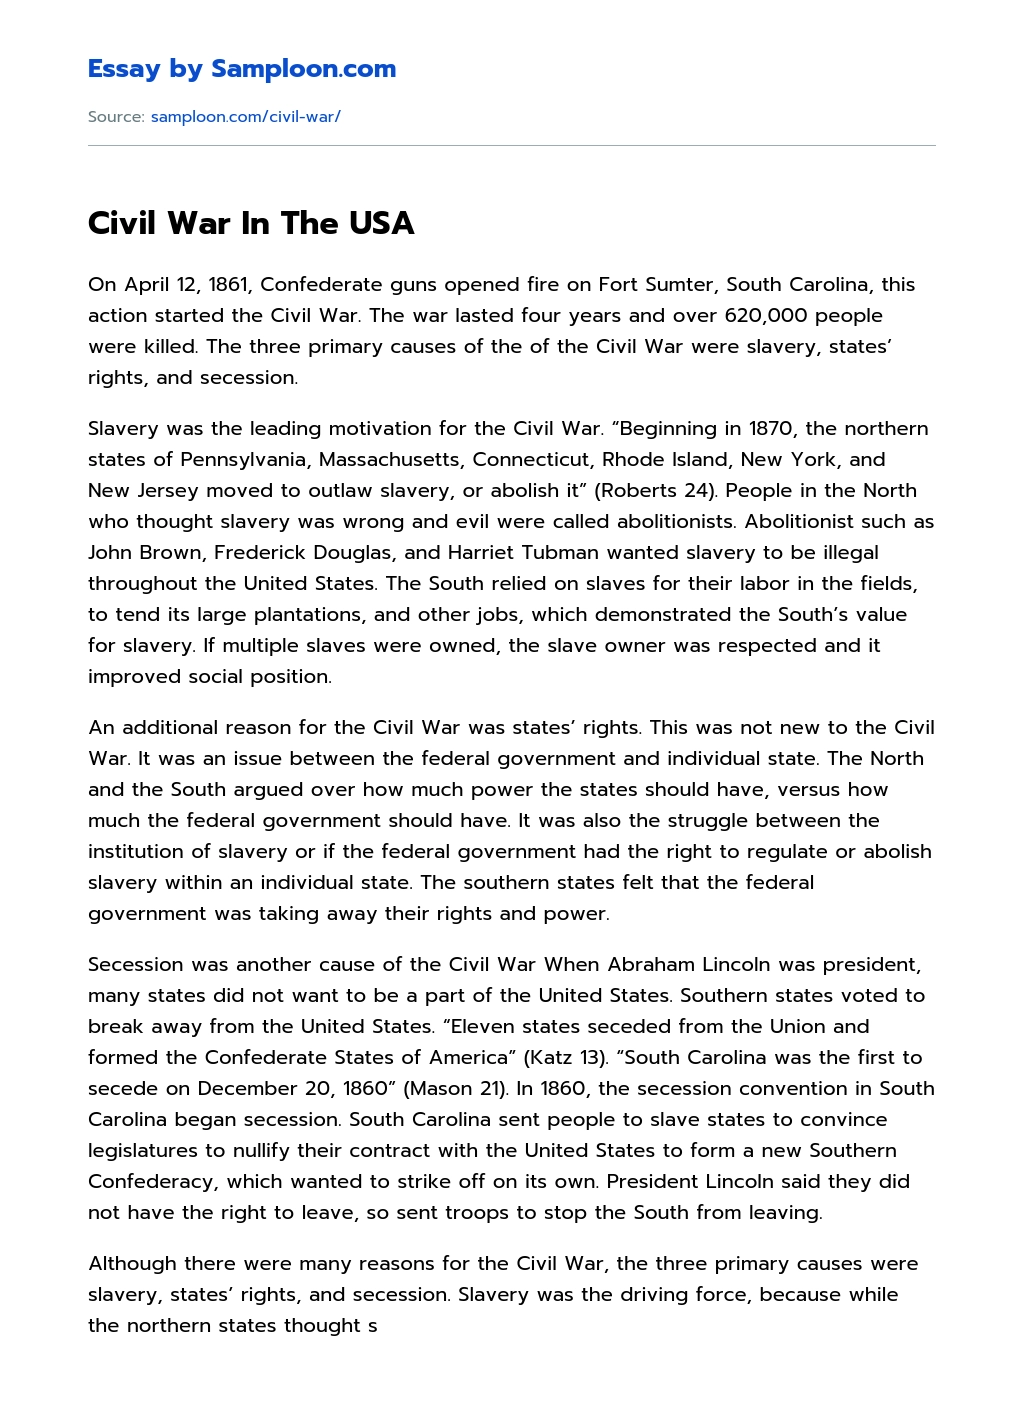 Civil War In The USA essay